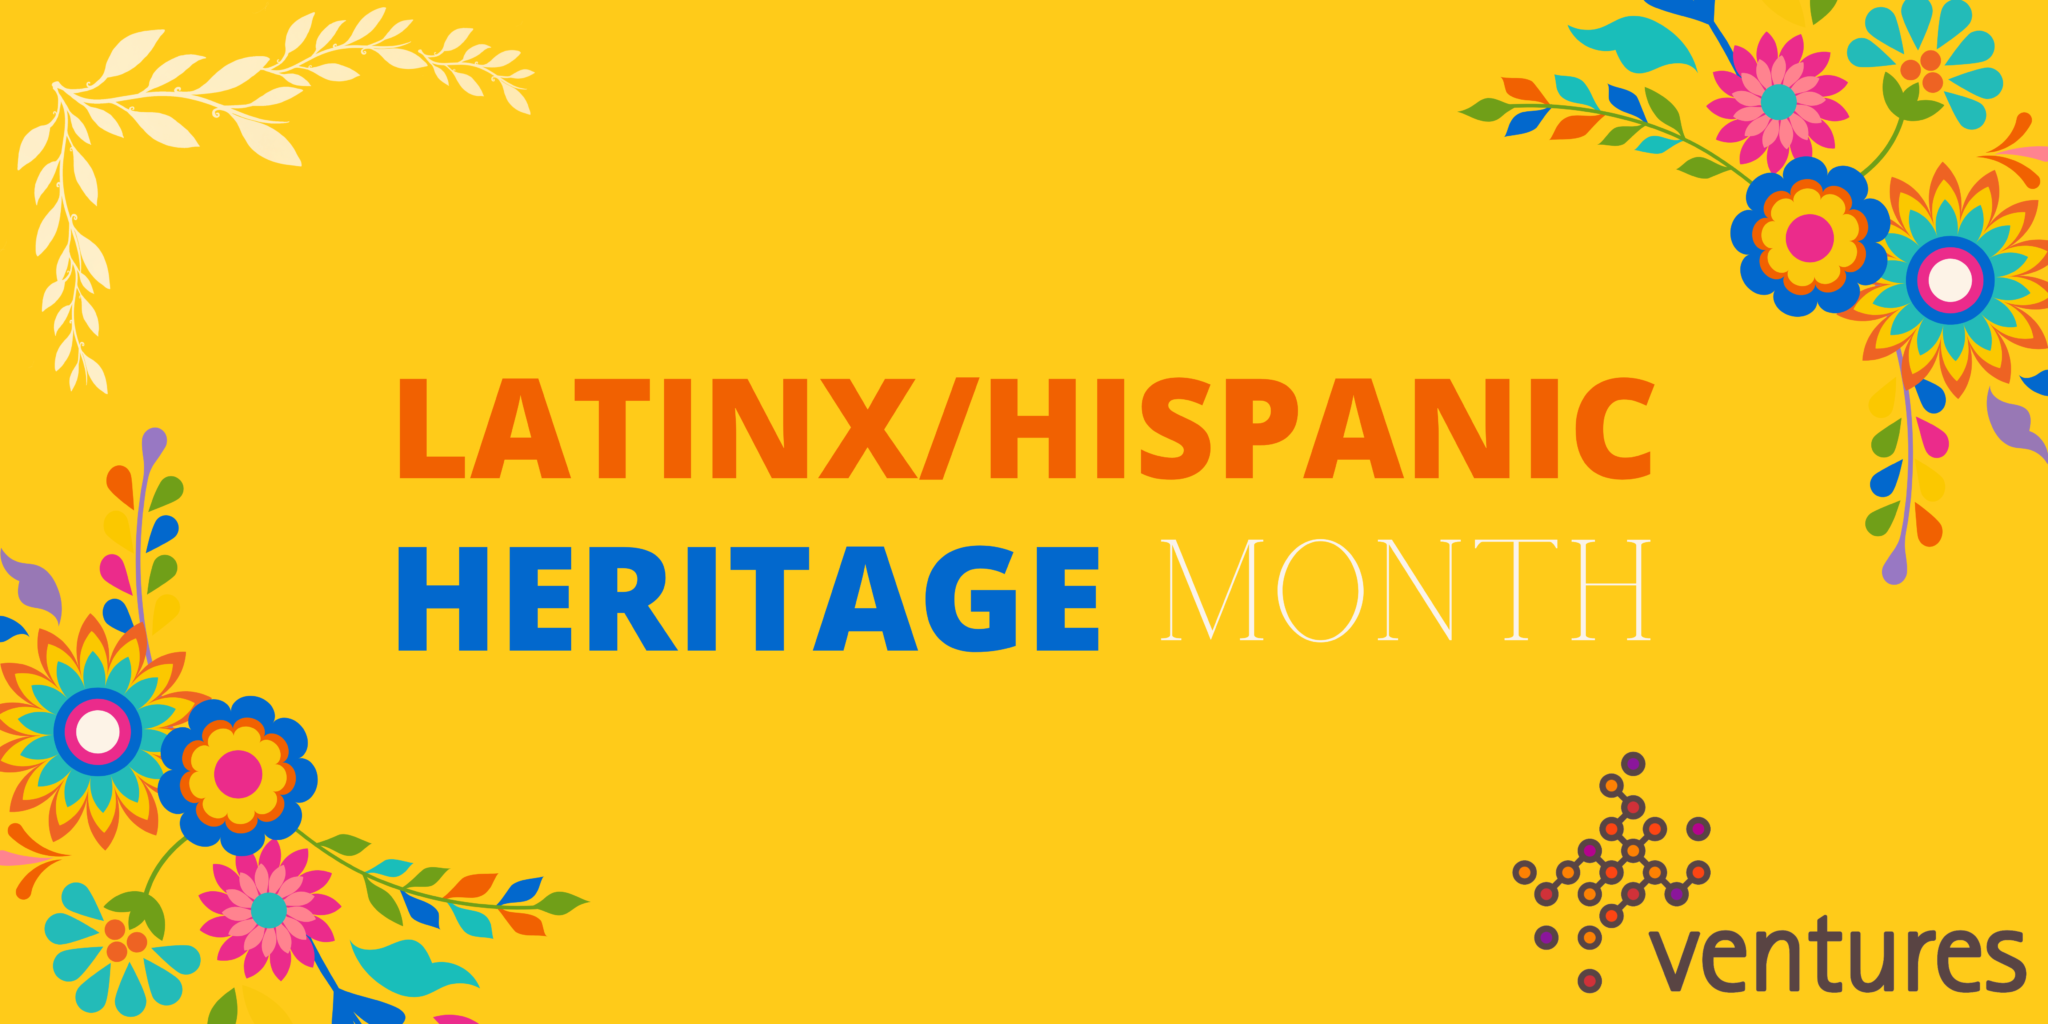 Latinx/Hispanic Heritage Month- Adela Chávez